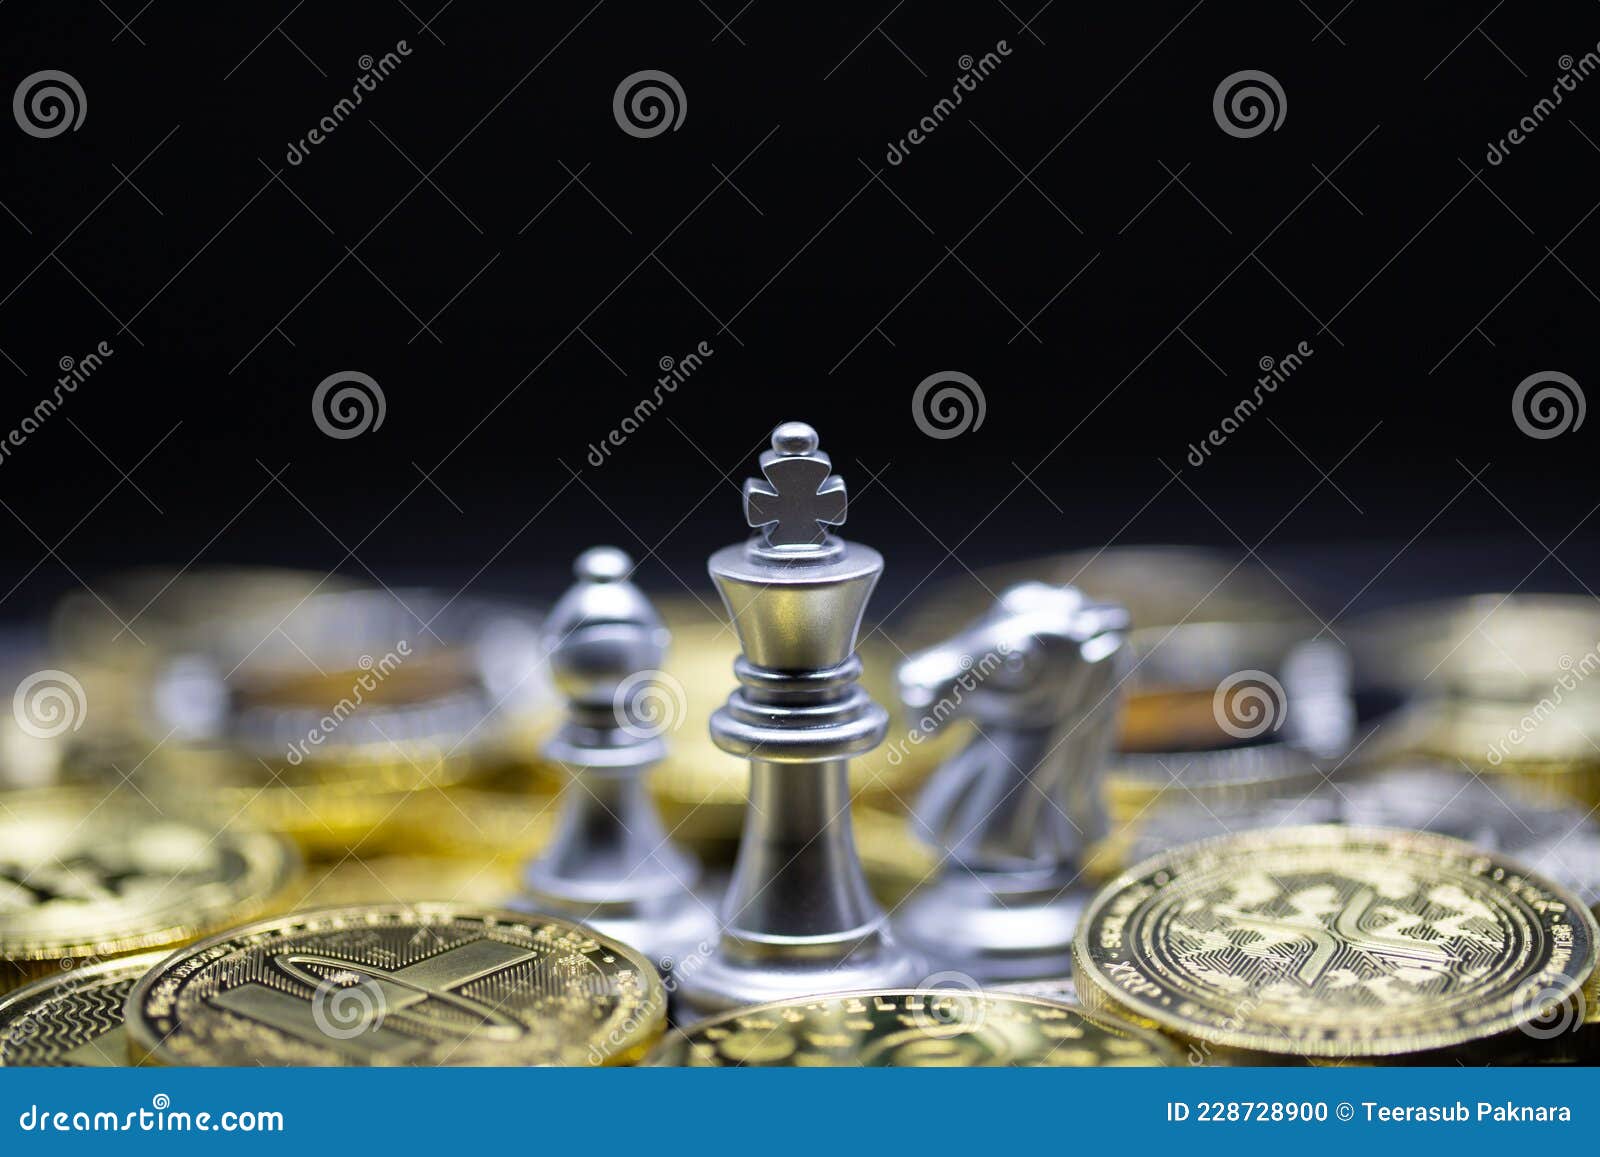 Xadrez do rei dourado em frente a outro xadrez